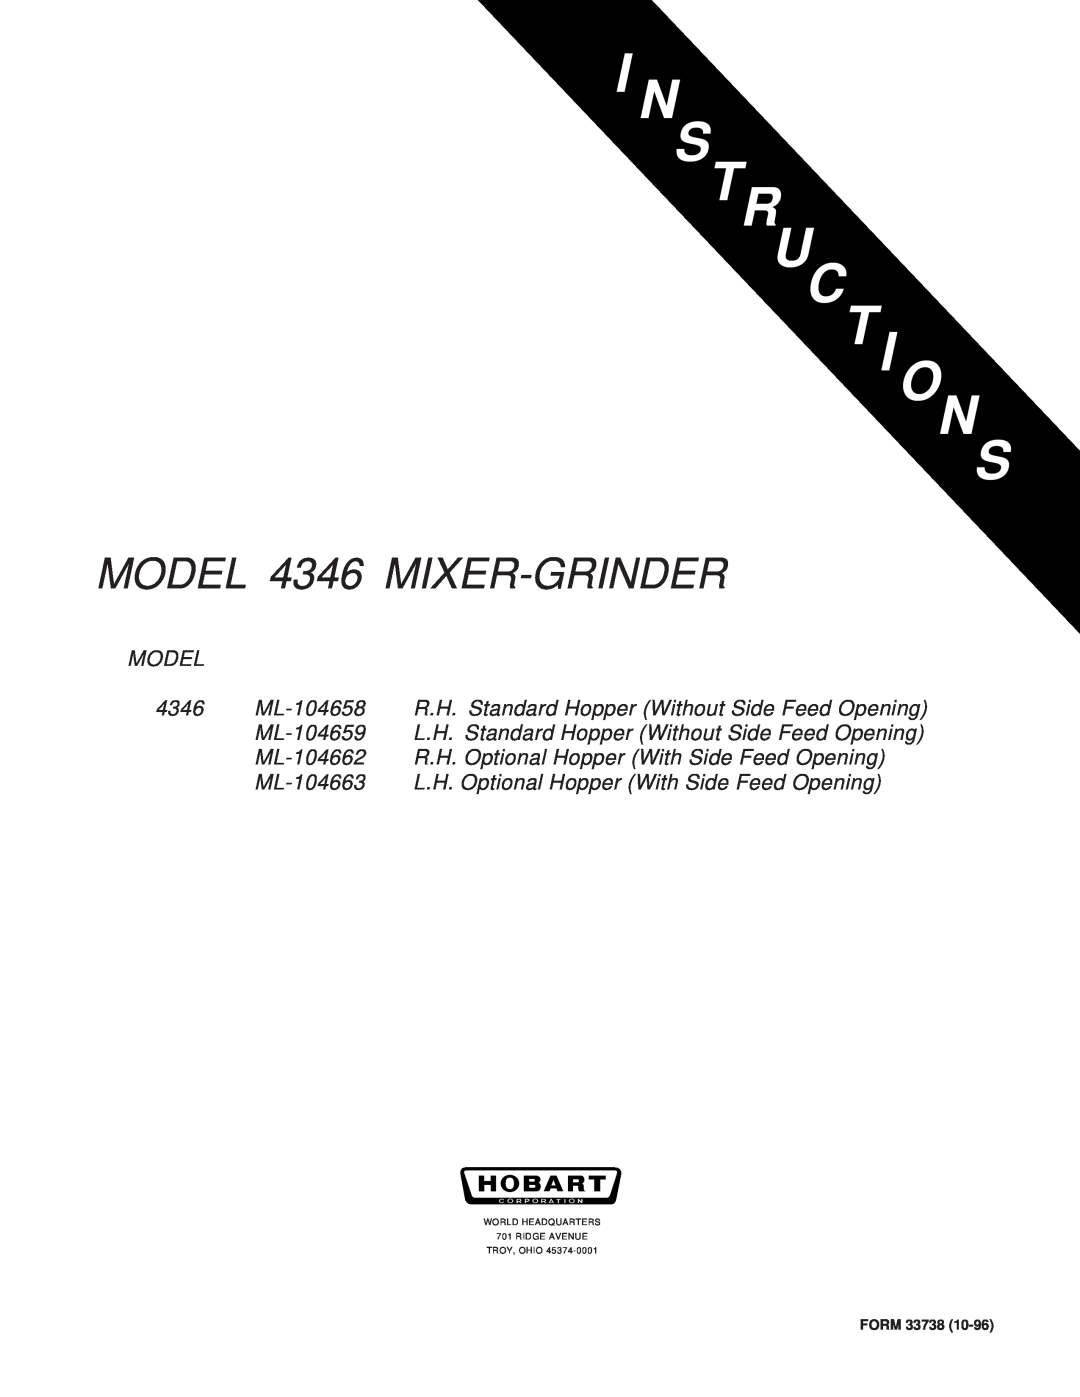 Hobart manual MODEL 4346 MIXER-GRINDER, Model, 4346 ML-104658, R.H. Standard Hopper Without Side Feed Opening, Form 